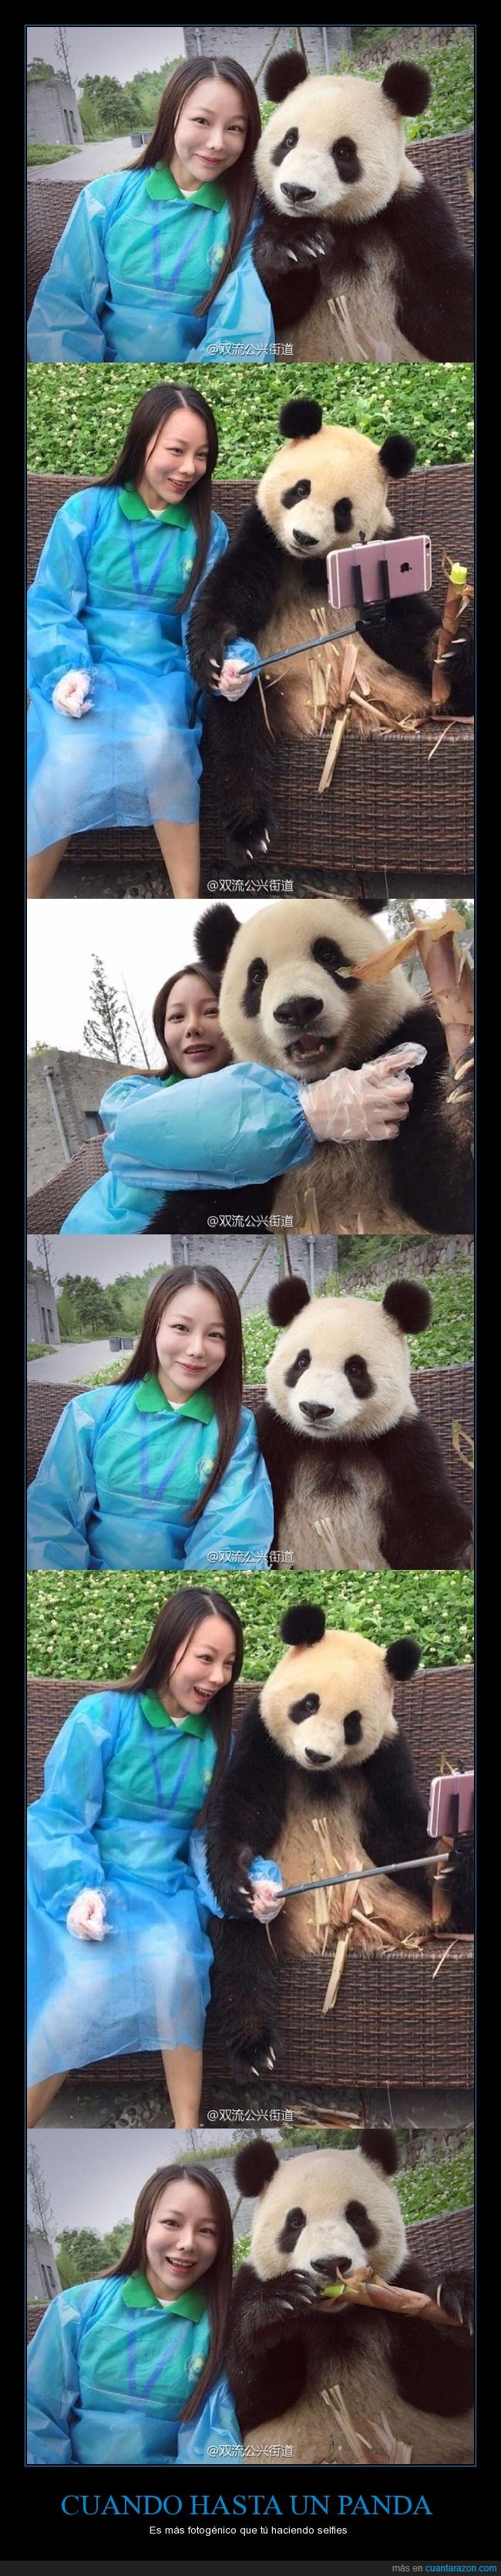 selfies,panda,oso